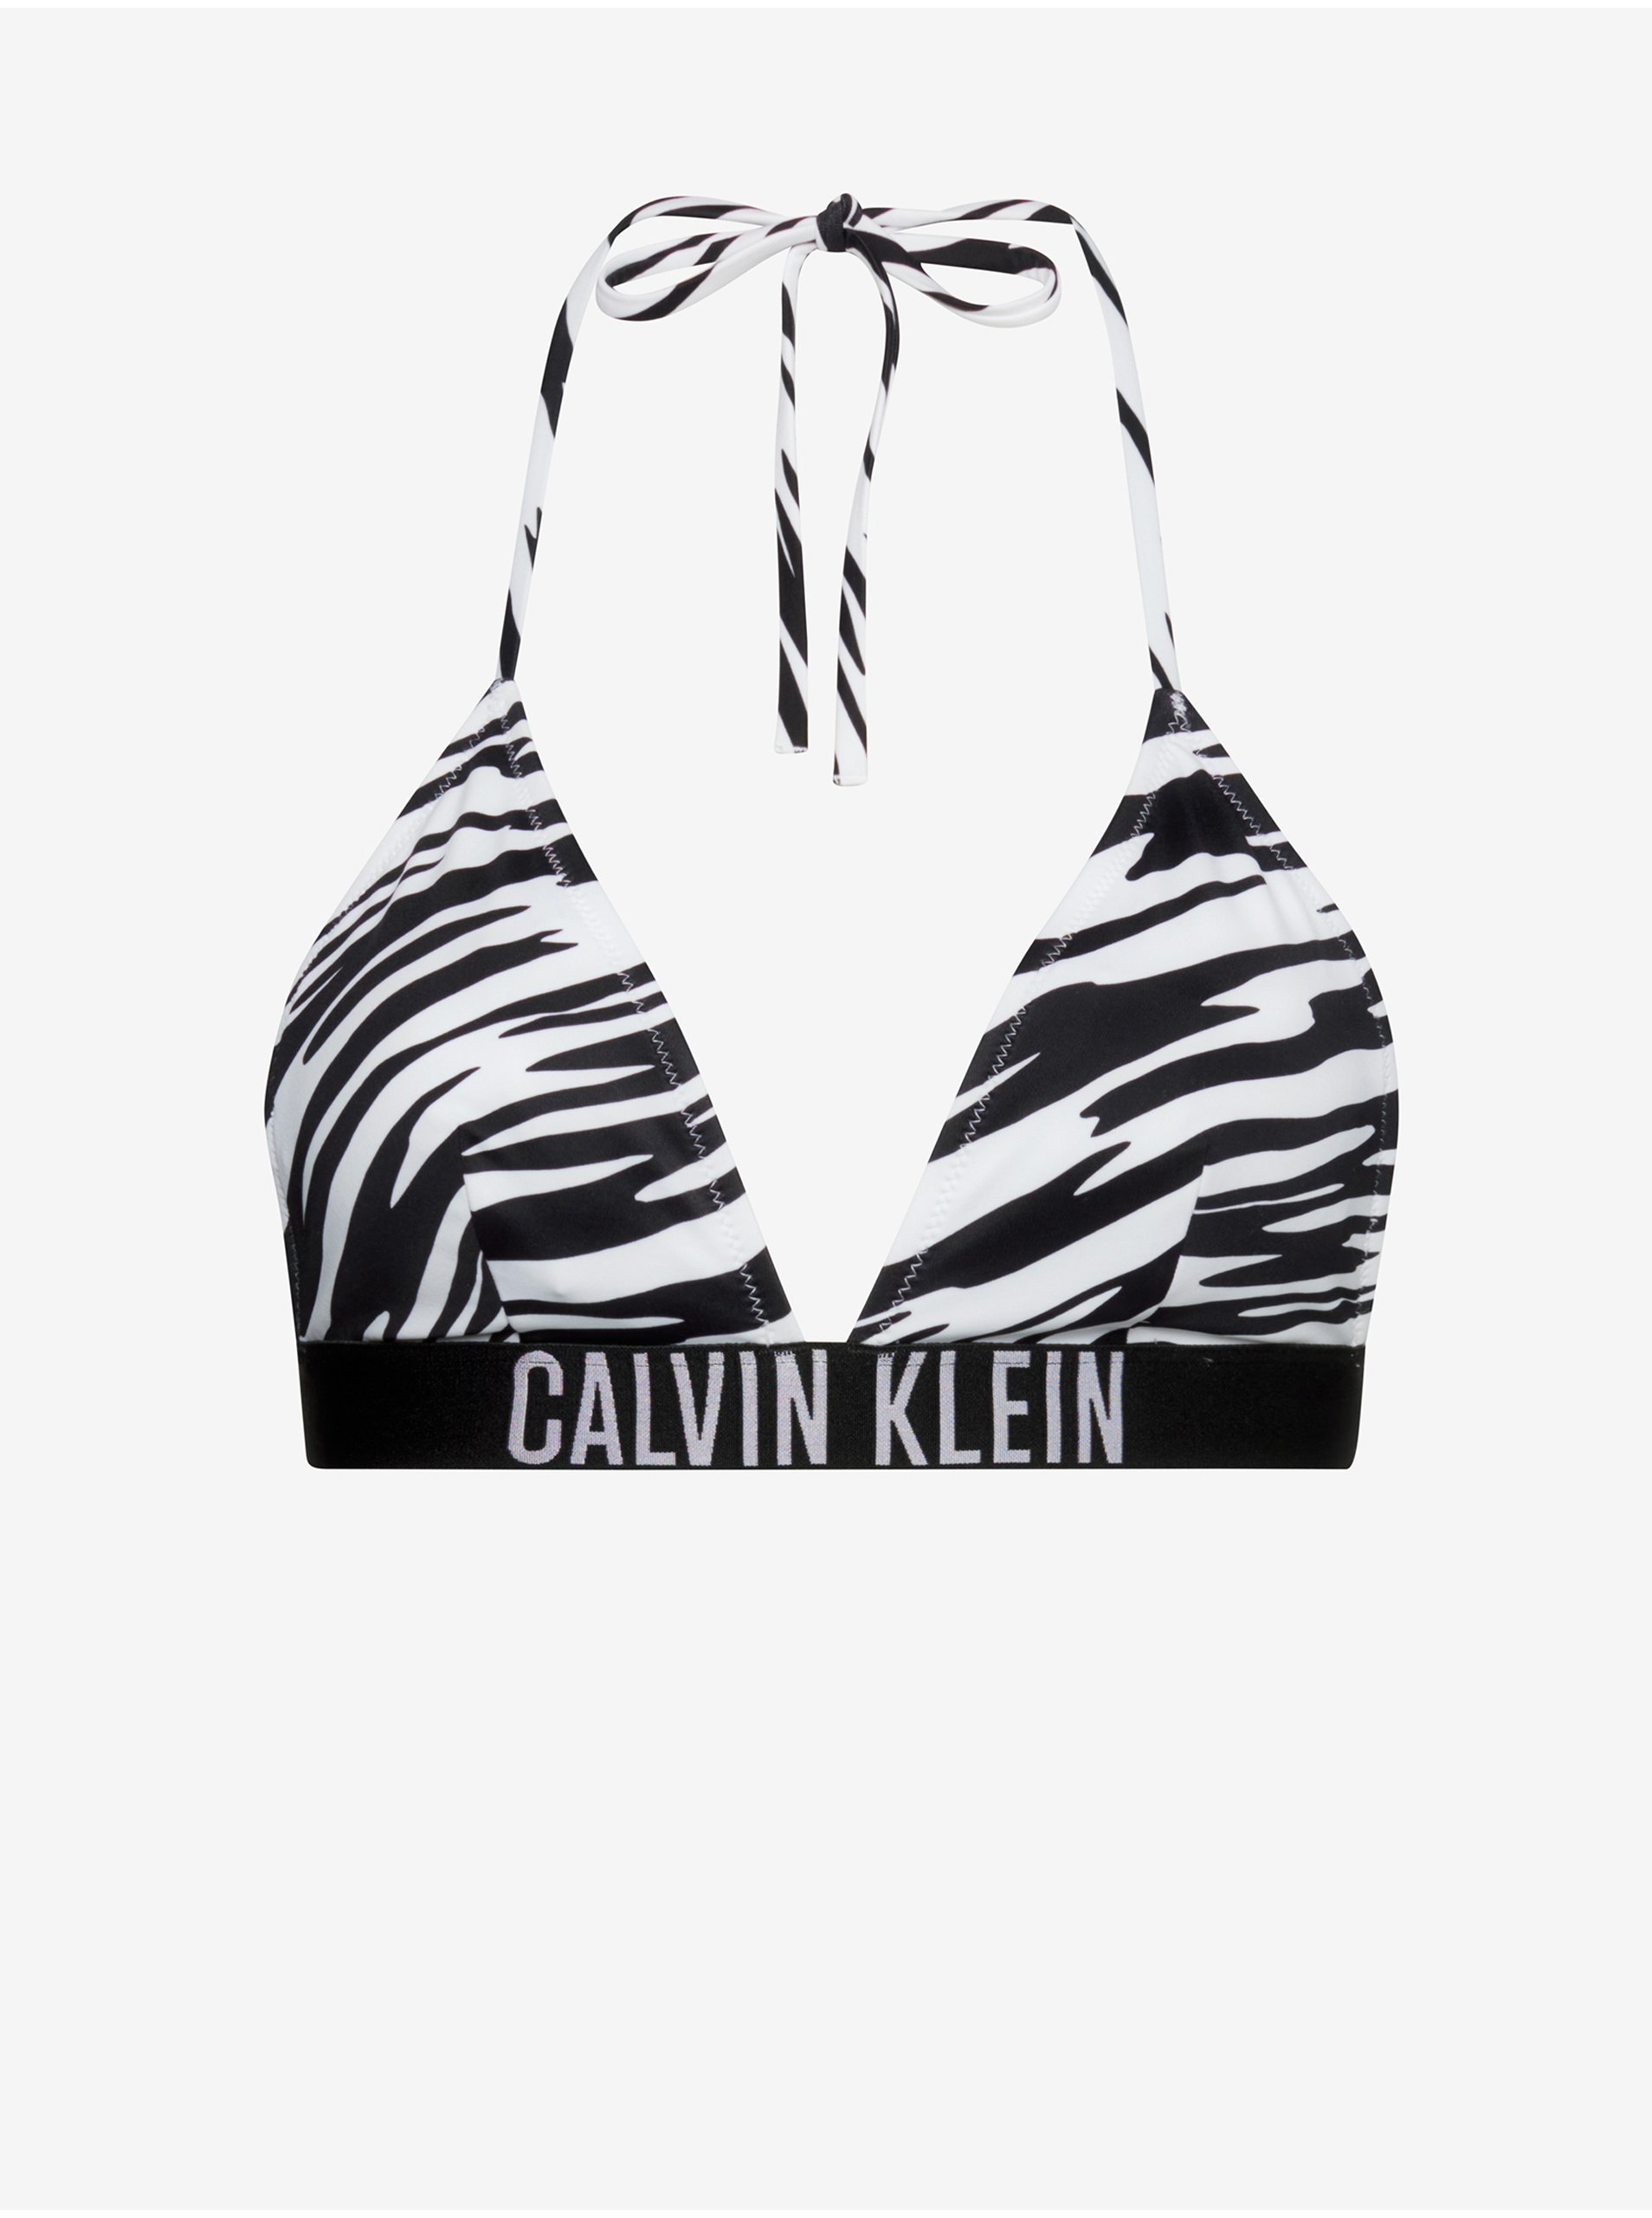 E-shop Černý dámský horní díl plavek Calvin Klein Underwear